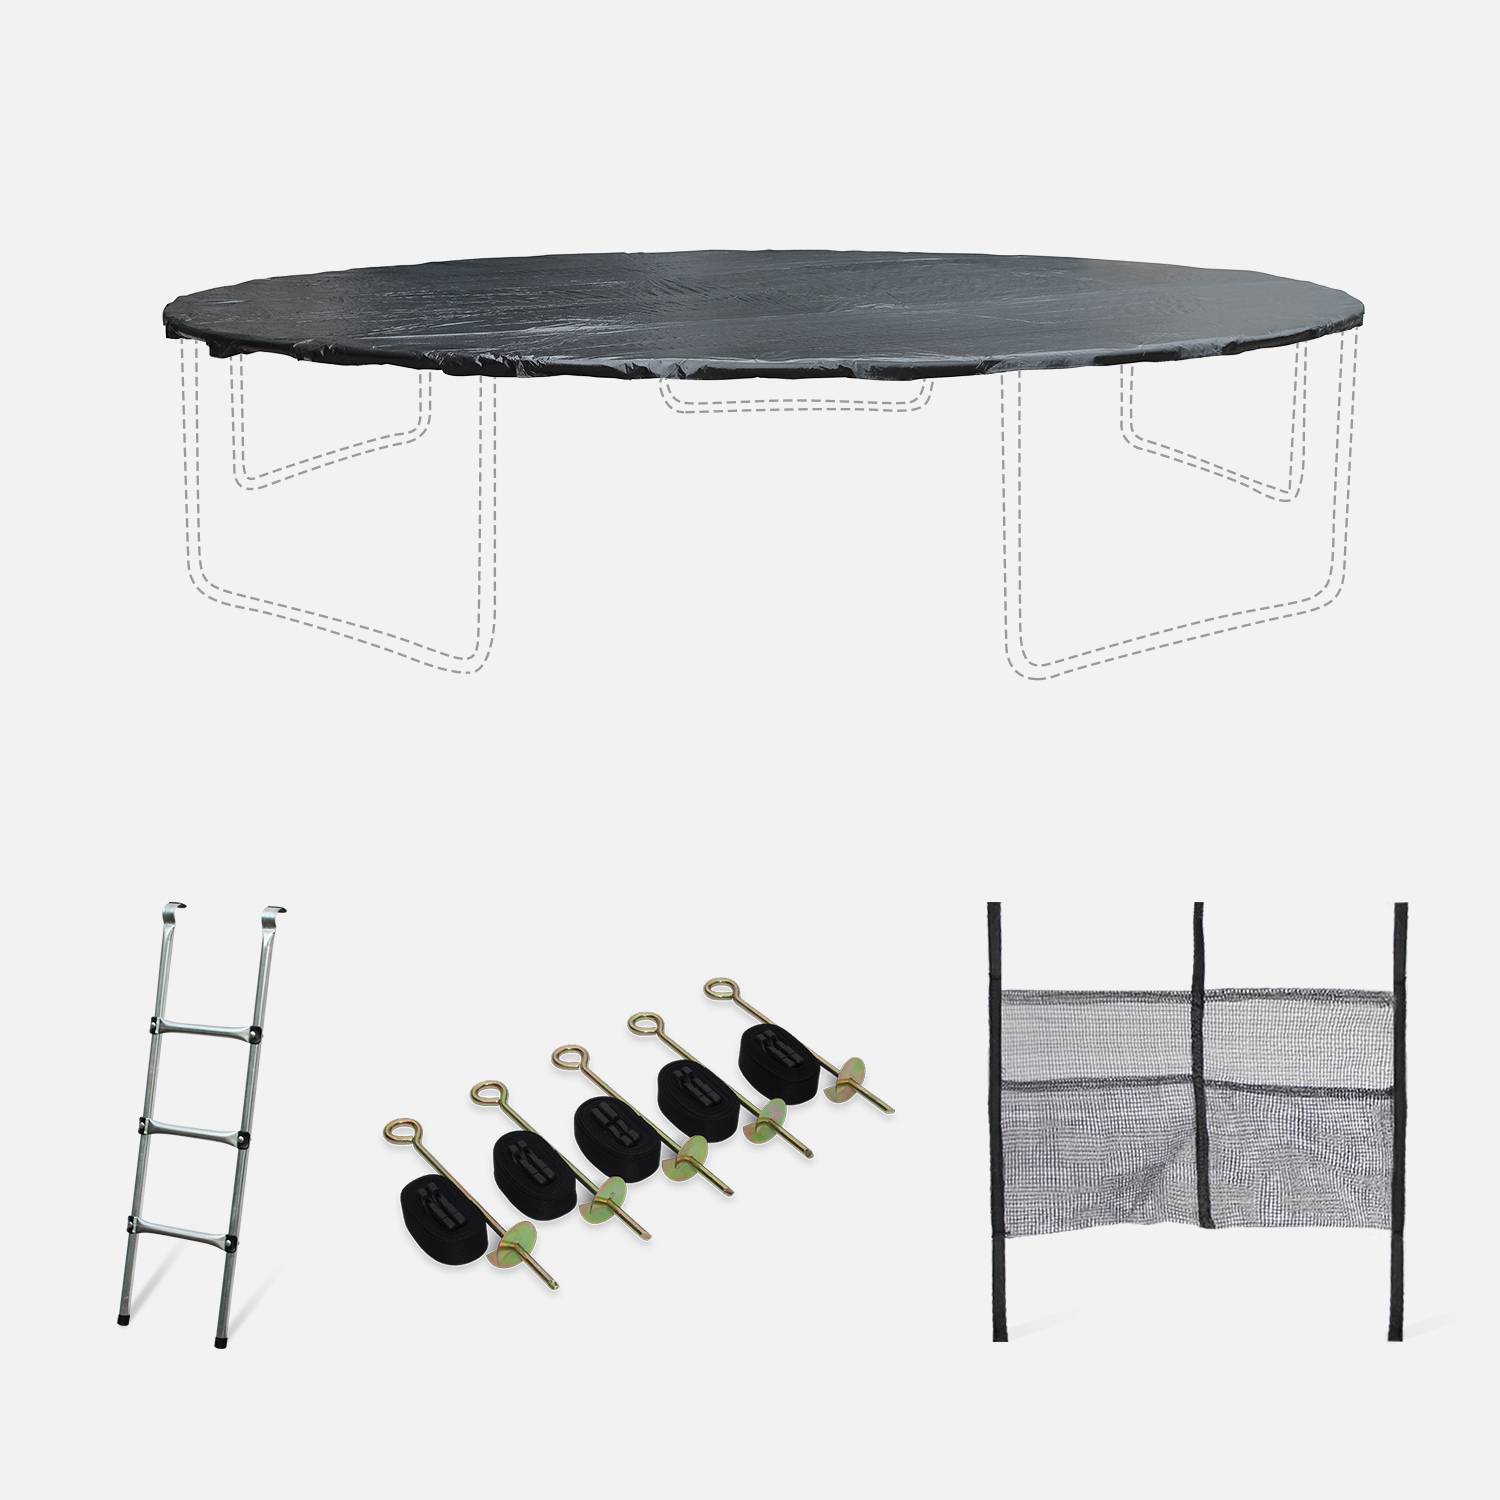 Trampoline Accessories Pack - Ø460 cm - Ladder, Rain Cover, Shoe Net, Anchor Kit Photo1